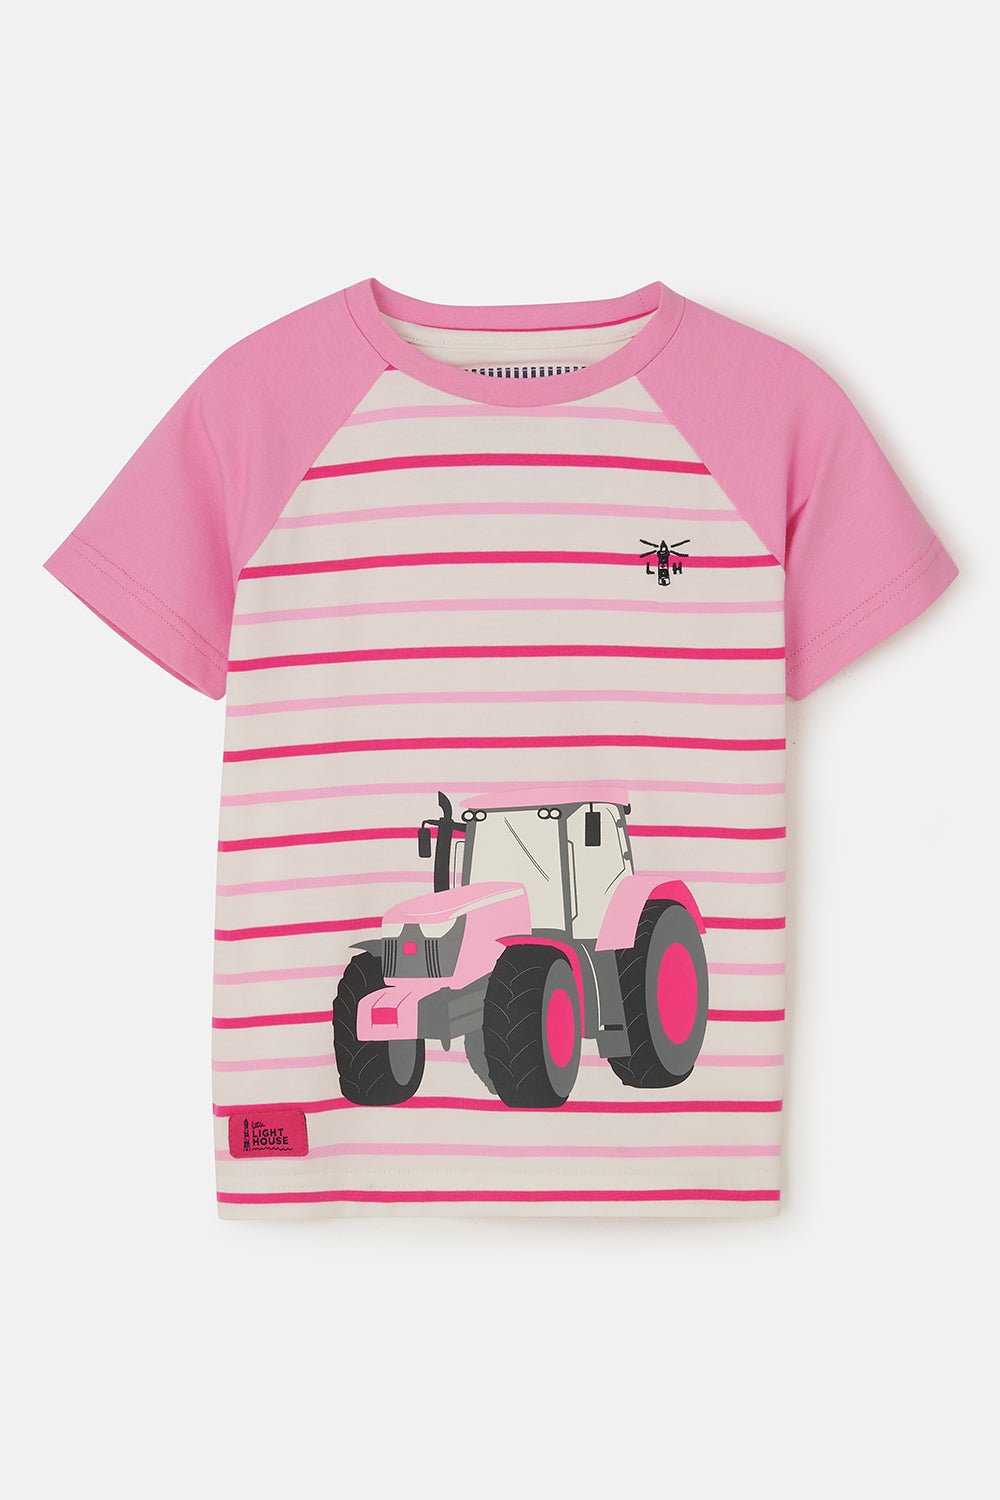 Causeway girls' t-shirt, Sweet Pea Tractor